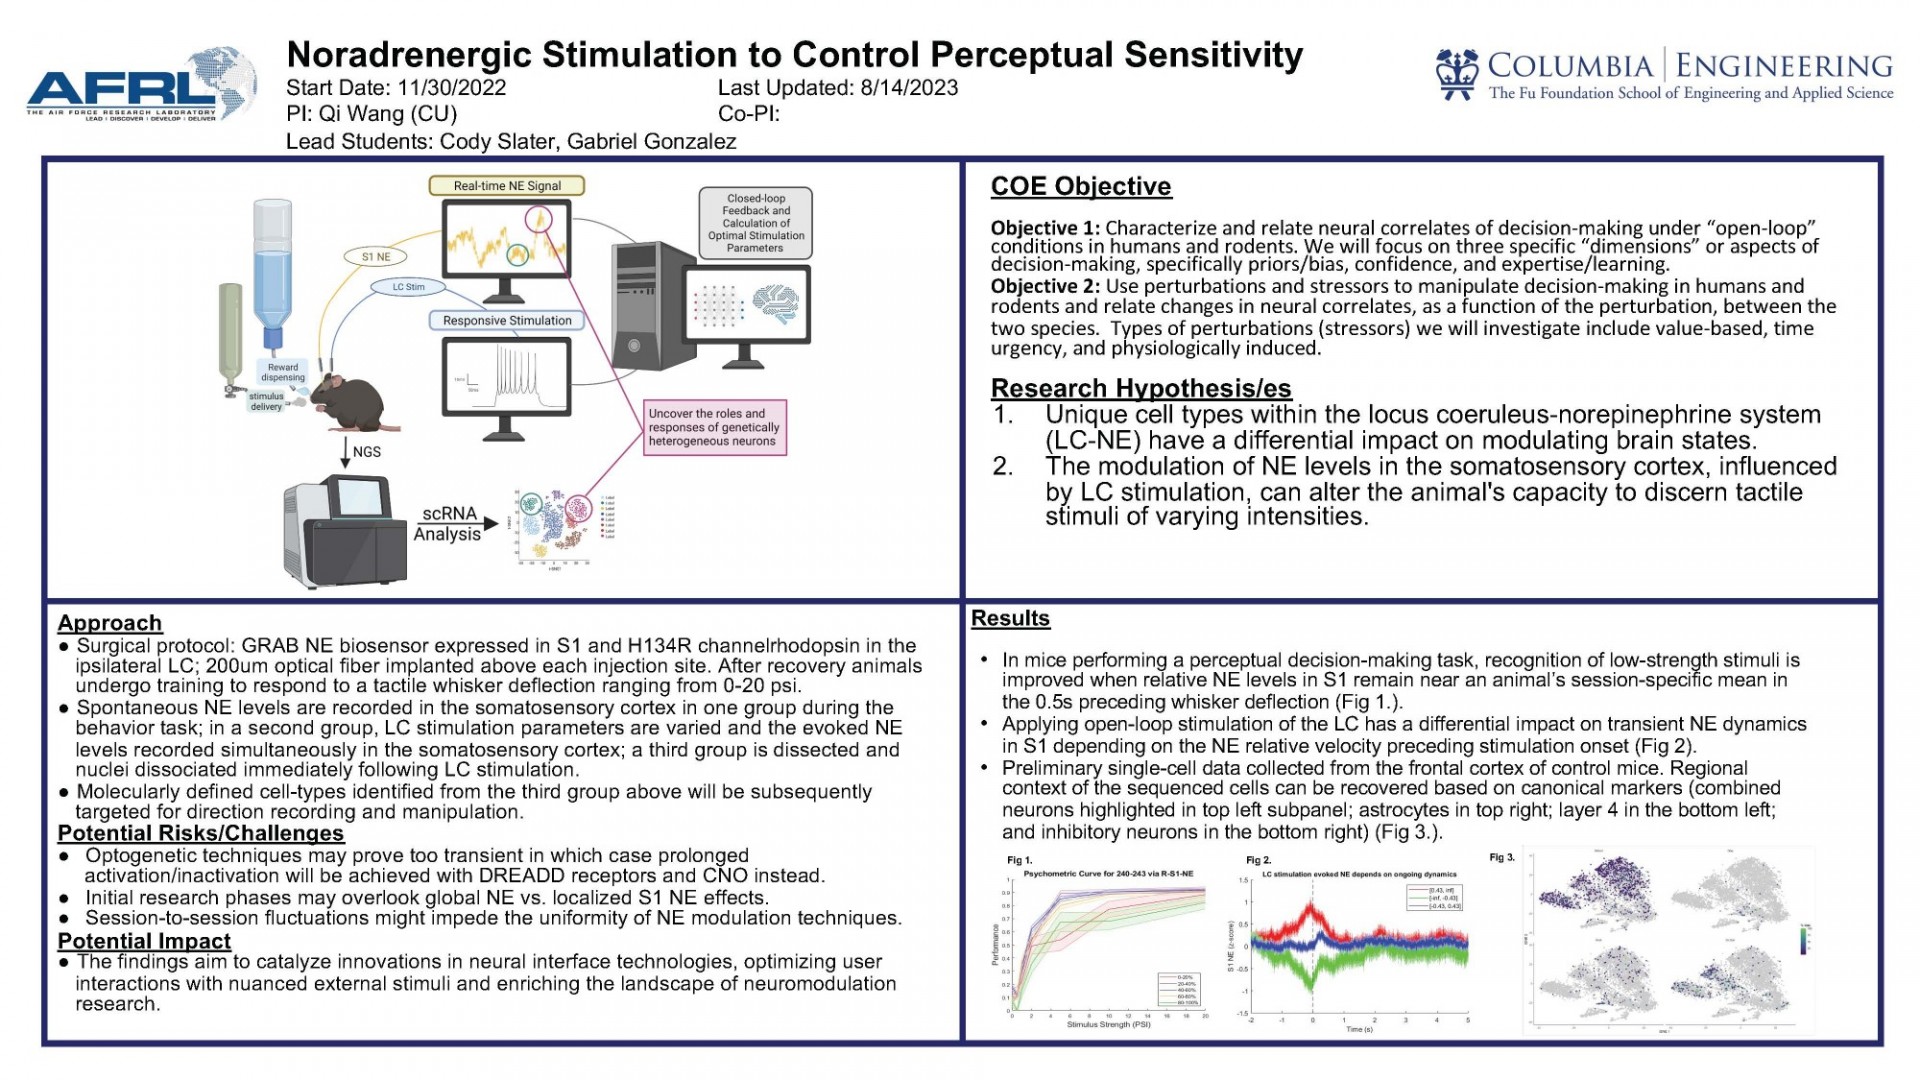 "Noradrenergic Stimulation to Control Perceptual Sensitivity"